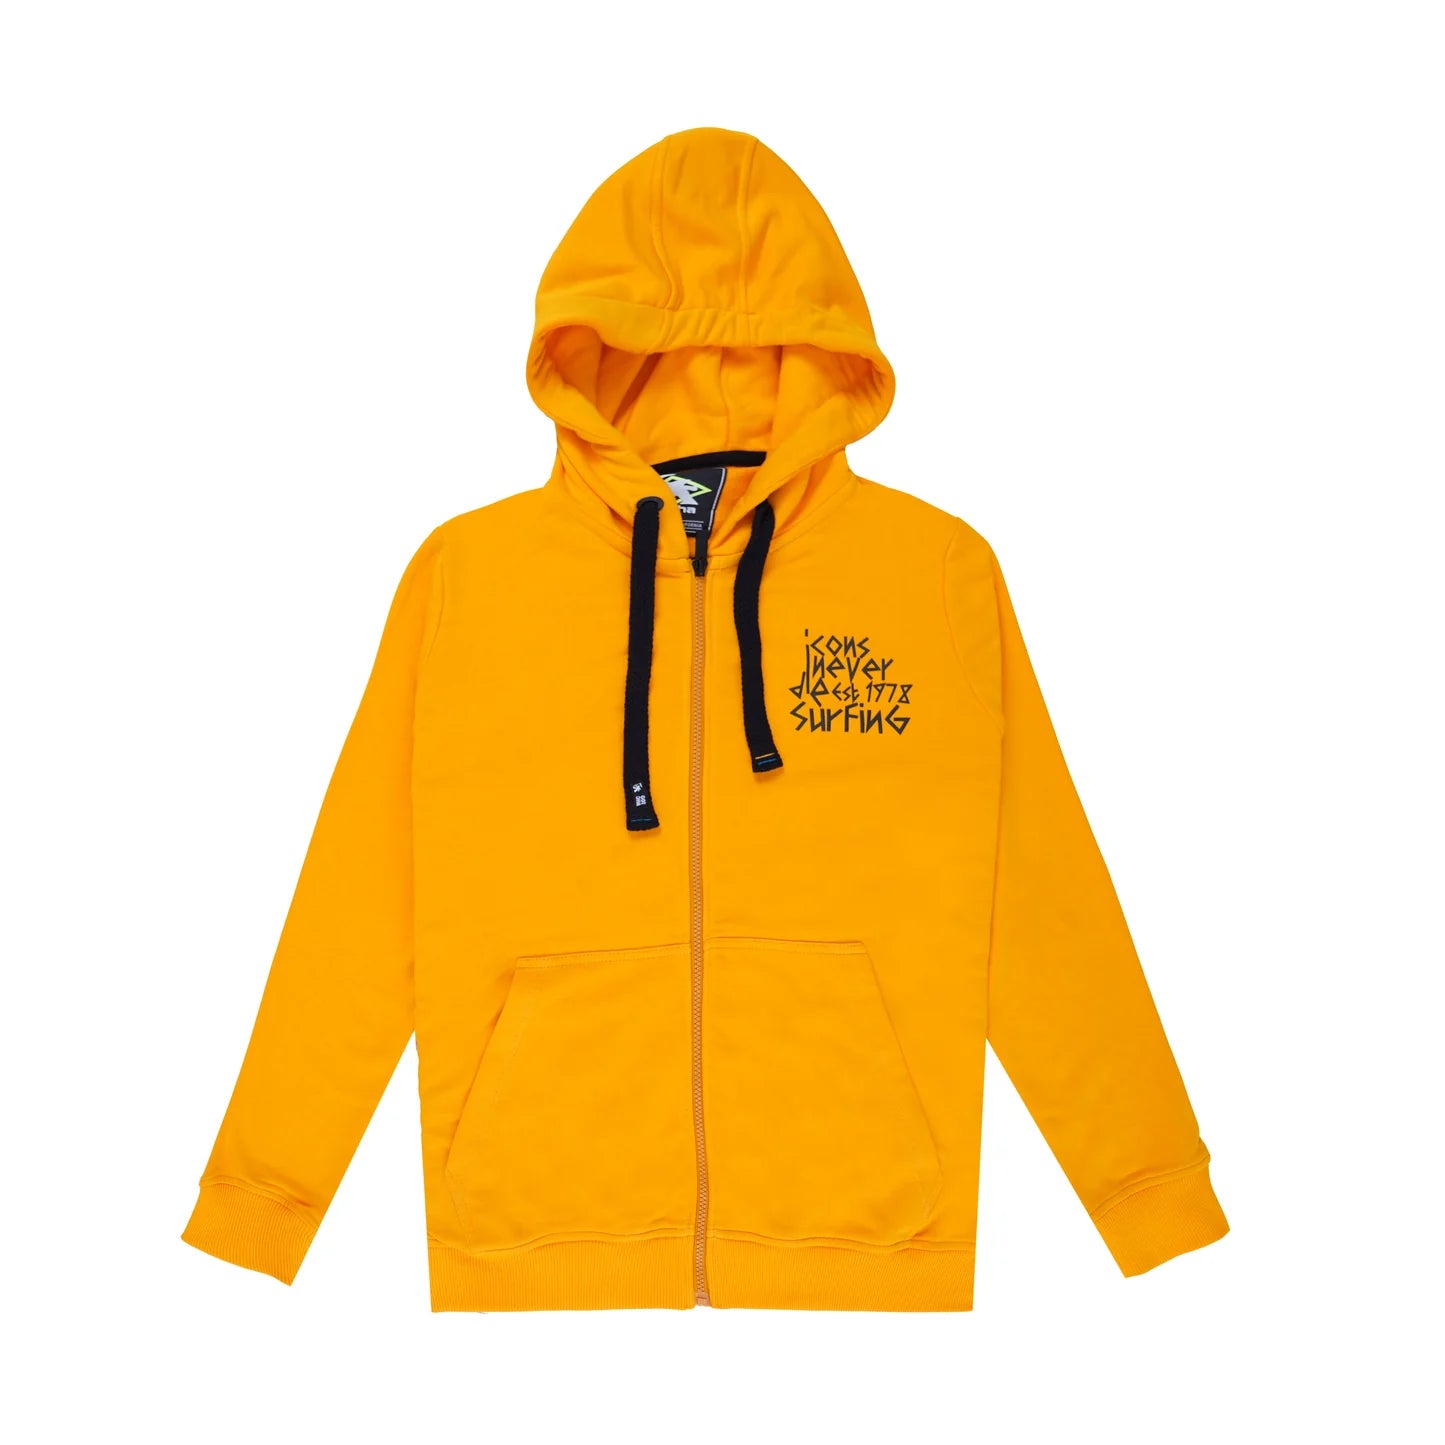 Saffron hoodie for men